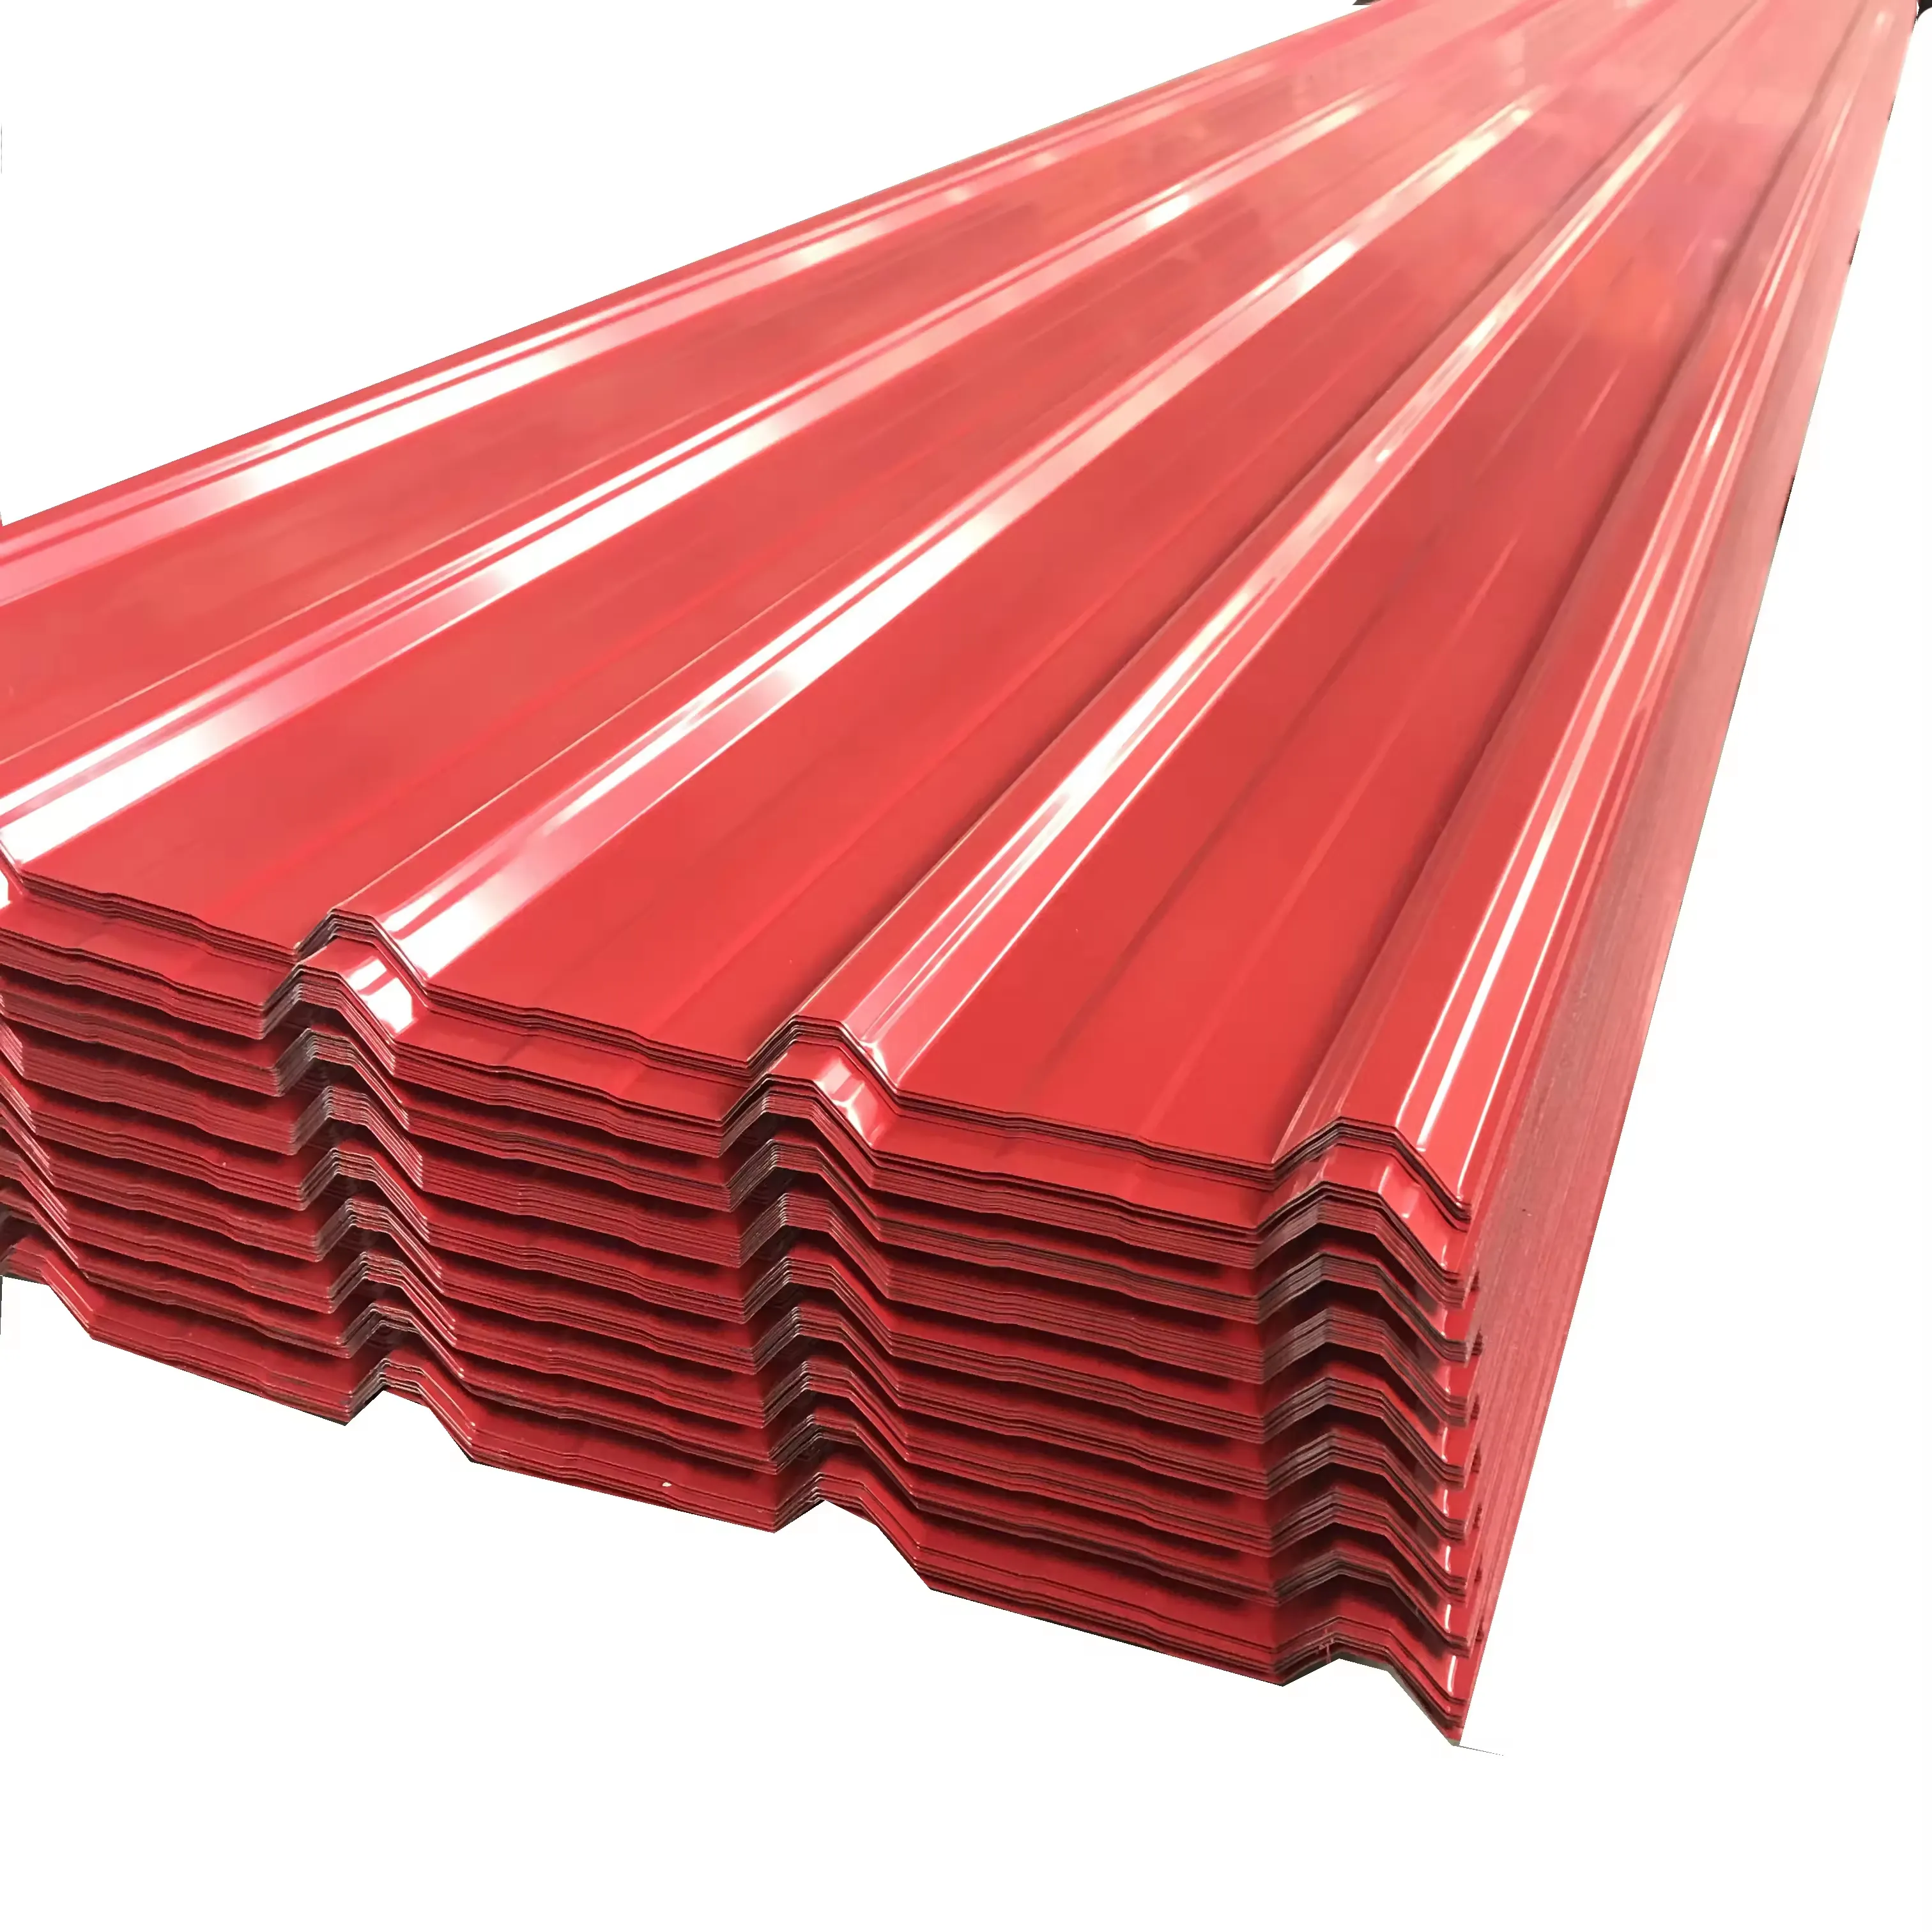 GI PPGI PPGL Colorful Coated Galvanized Corrugated Metal Roof Tiles Sheet Zinc pvc Roofing Sheets Shingles